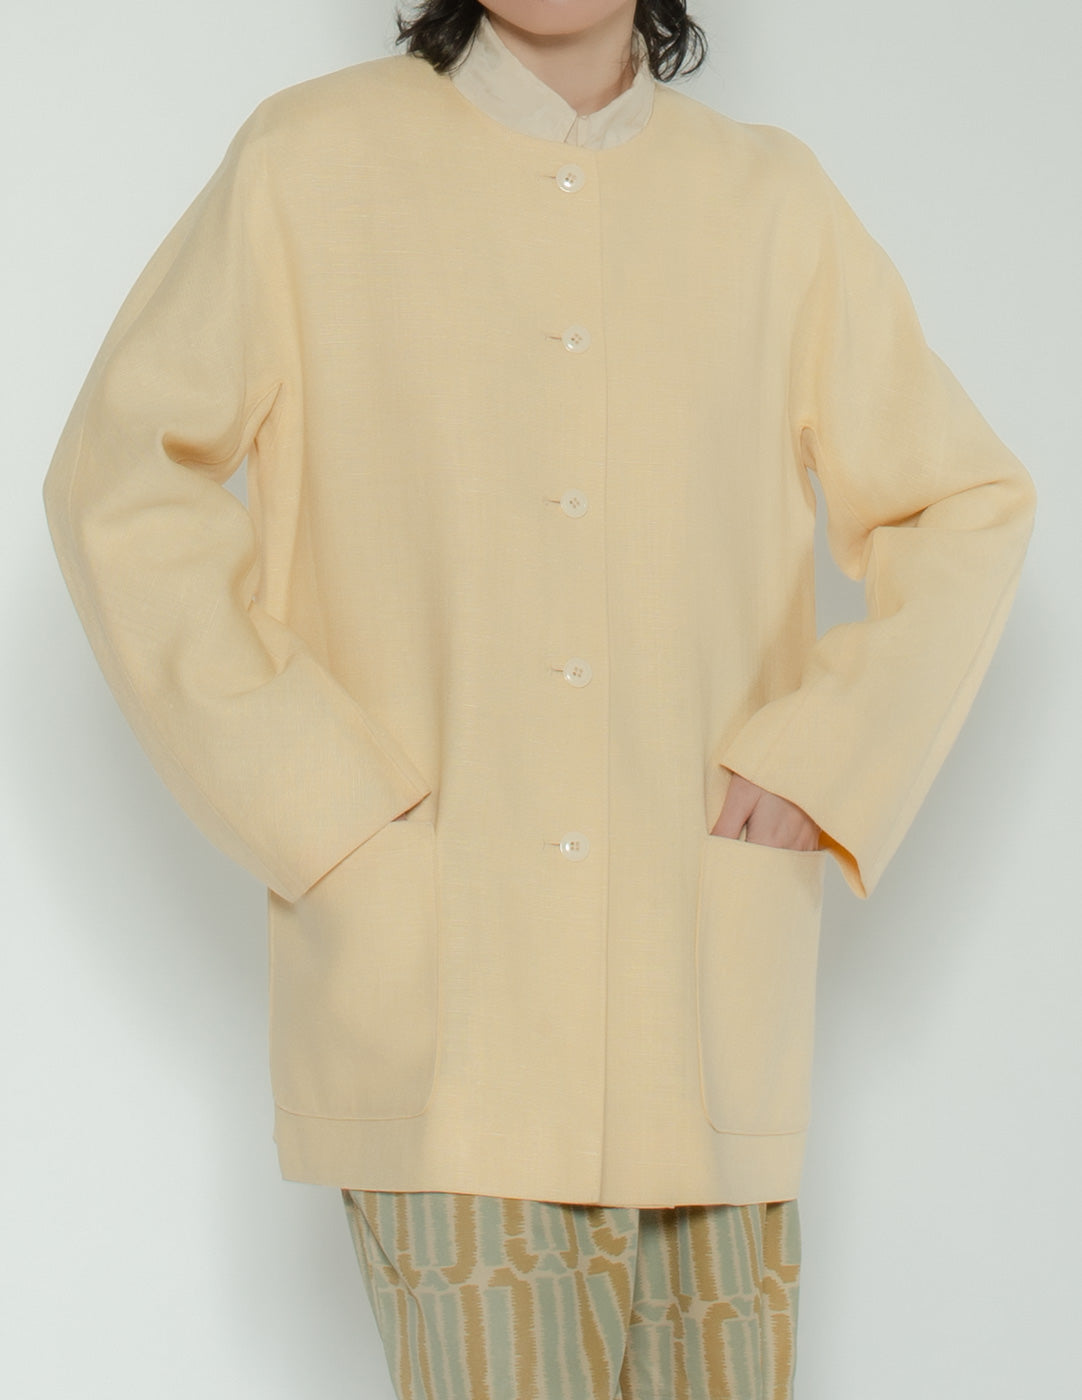 Oscar de la Renta vintage eggnog linen jacket front detail